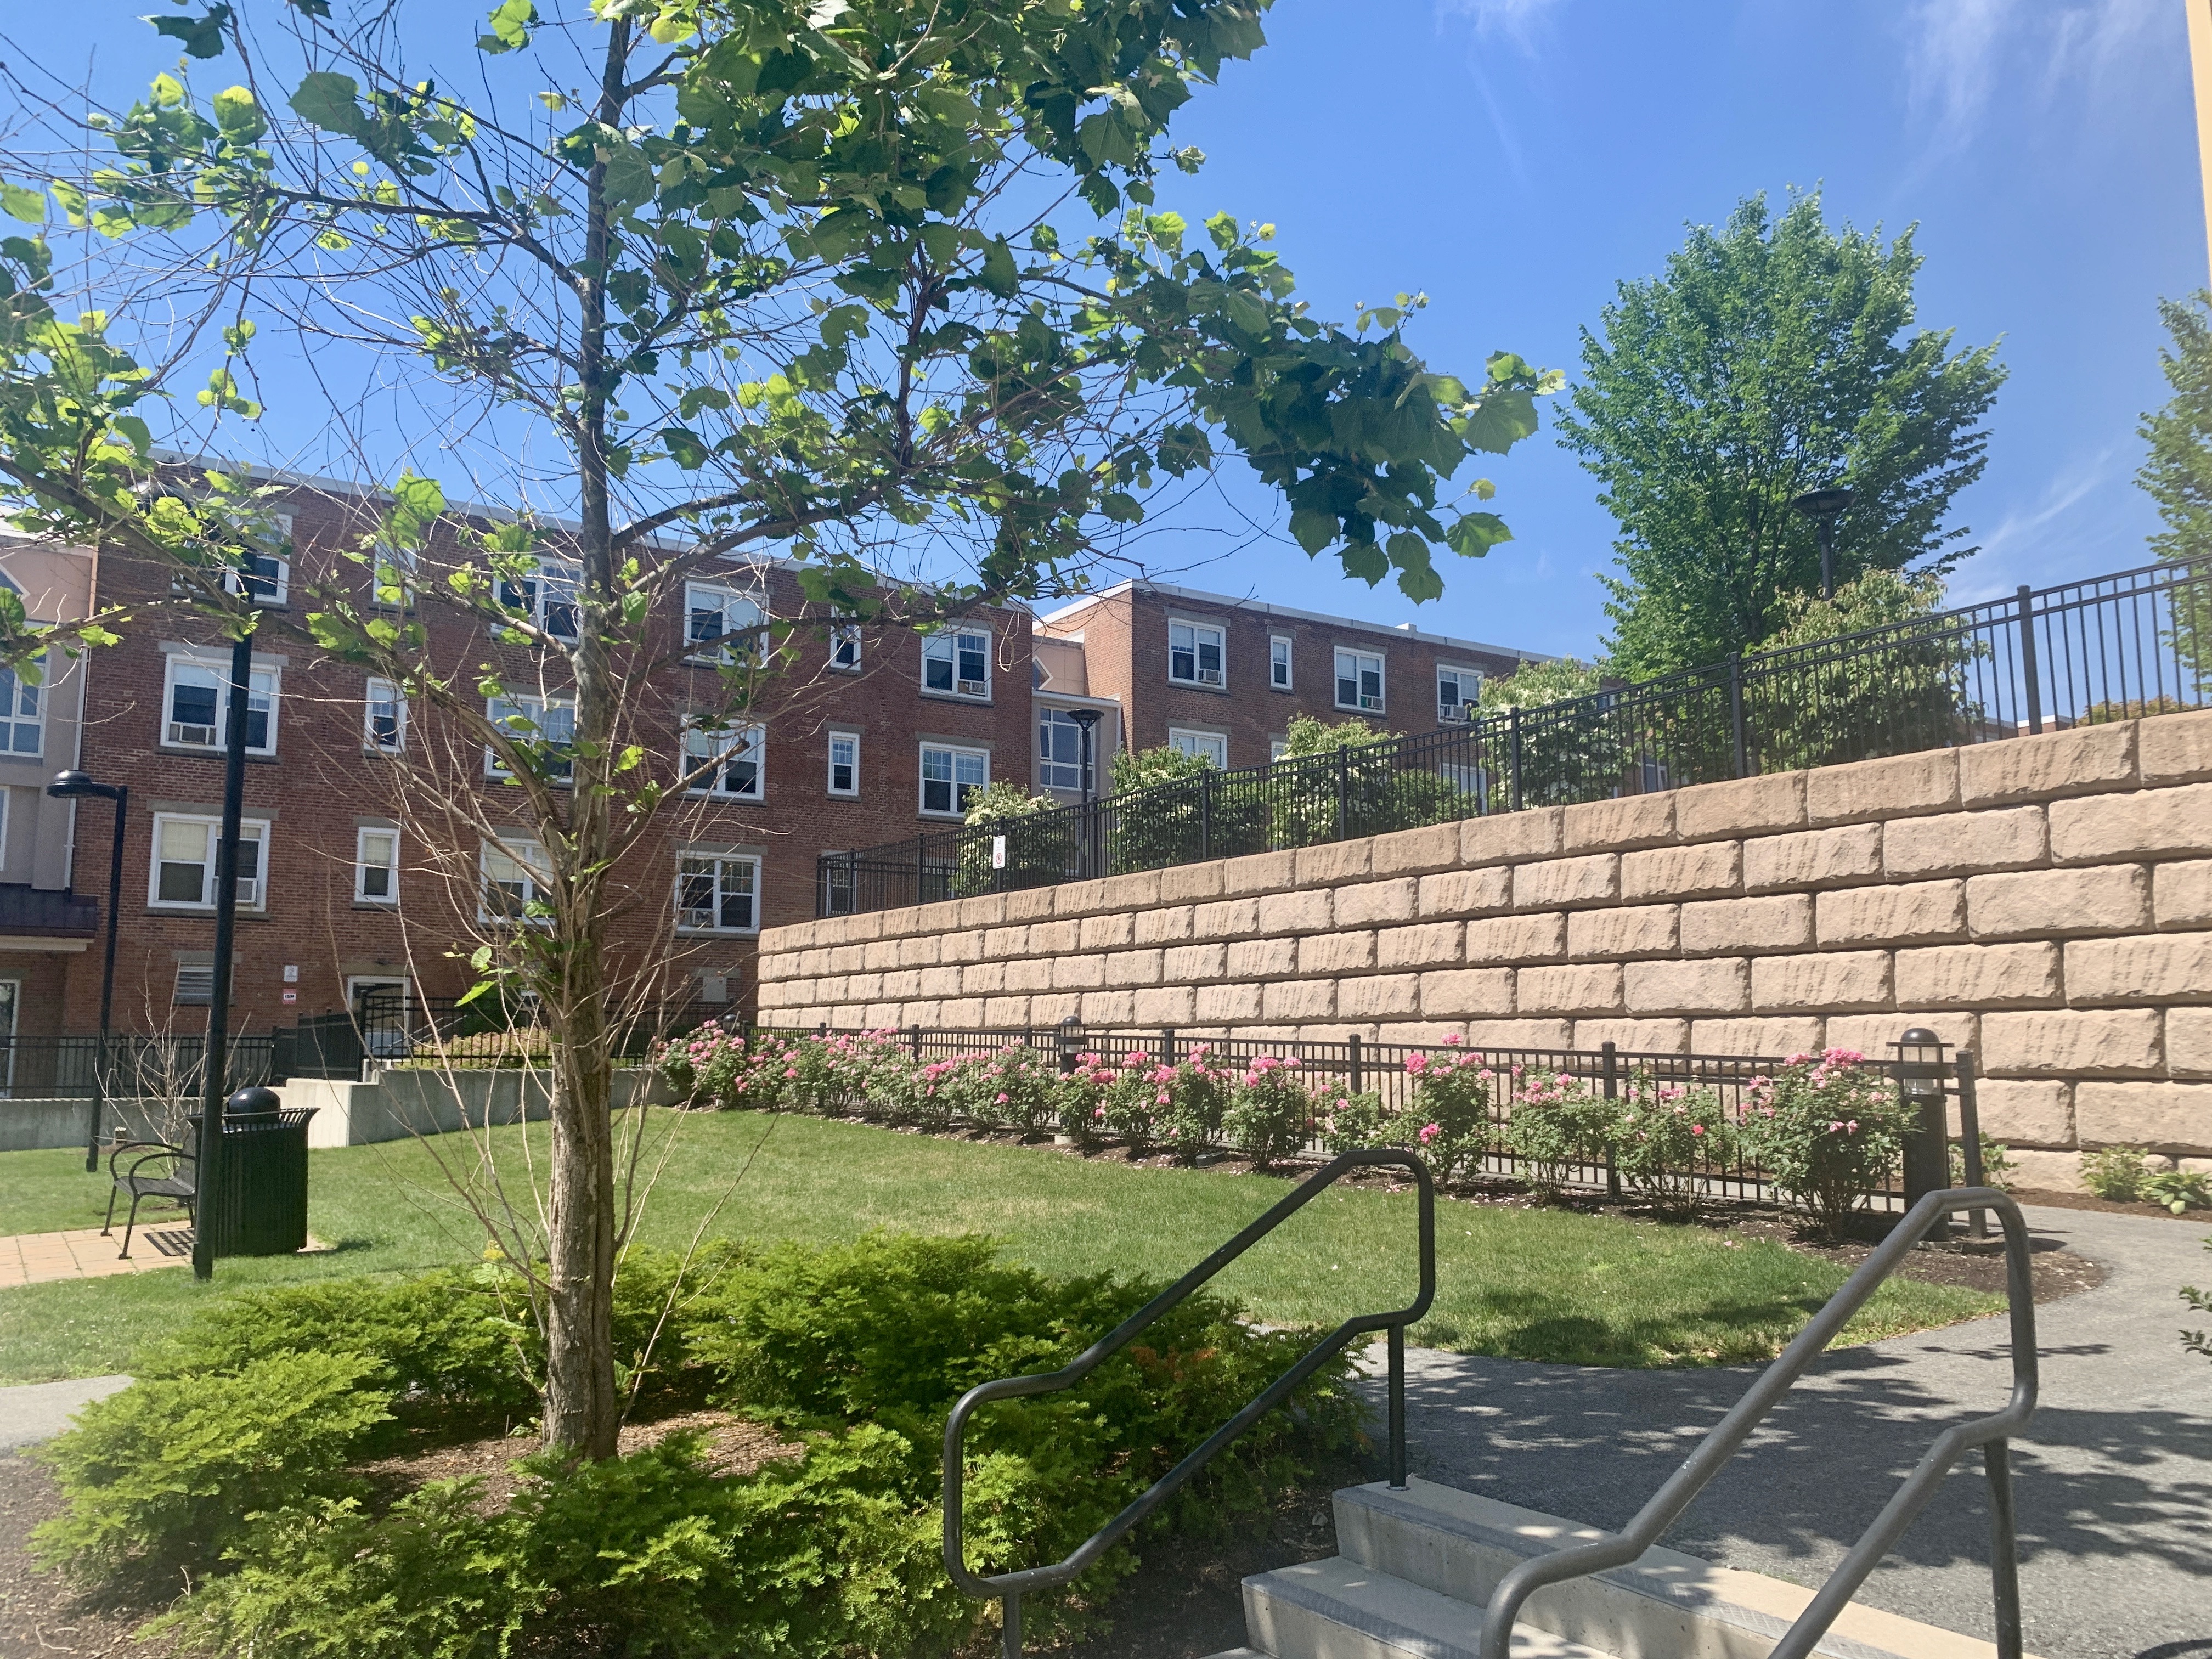 Dummer Street Apartments and Park near Boston University